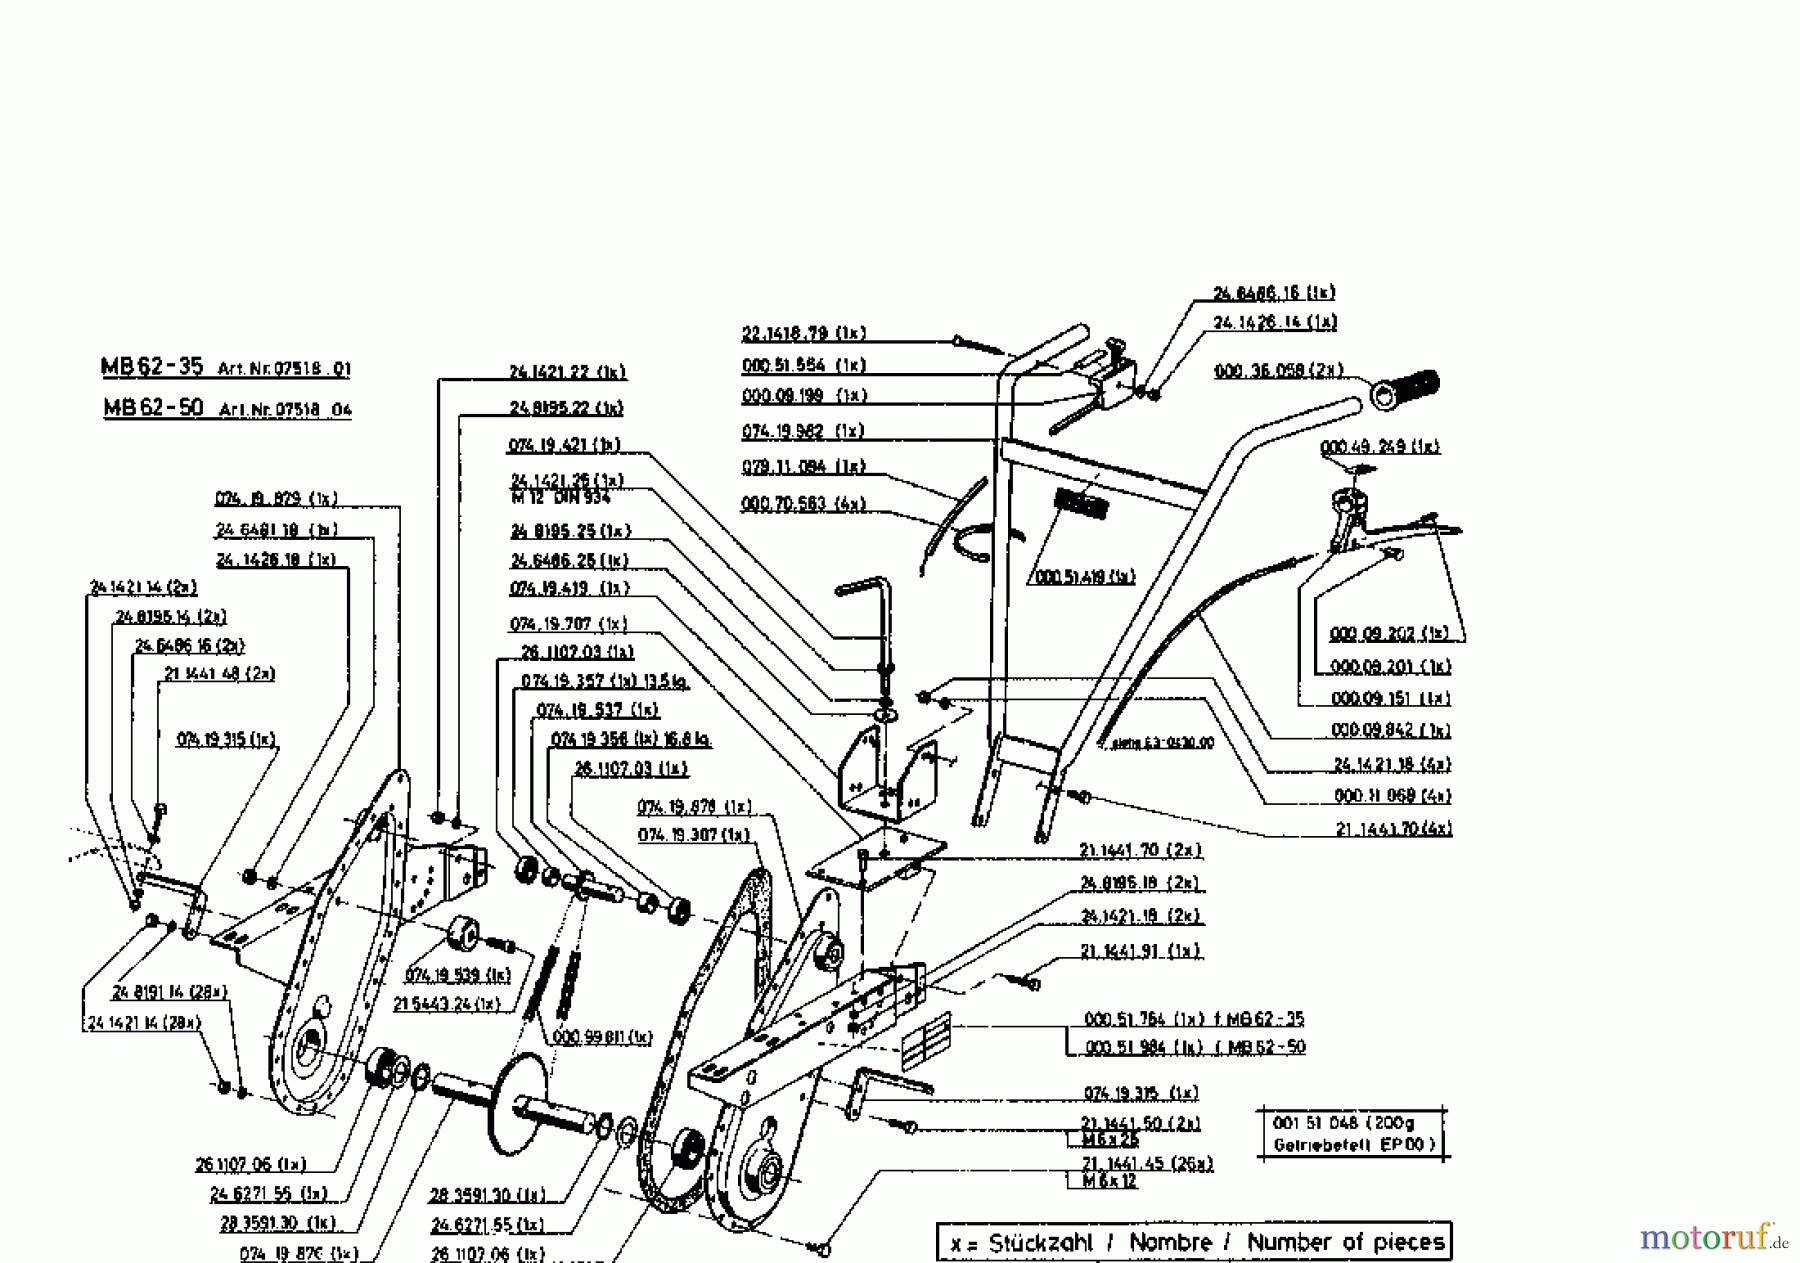  Gutbrod Motobineuse MB 62-35 07518.01  (1995) Machine de base